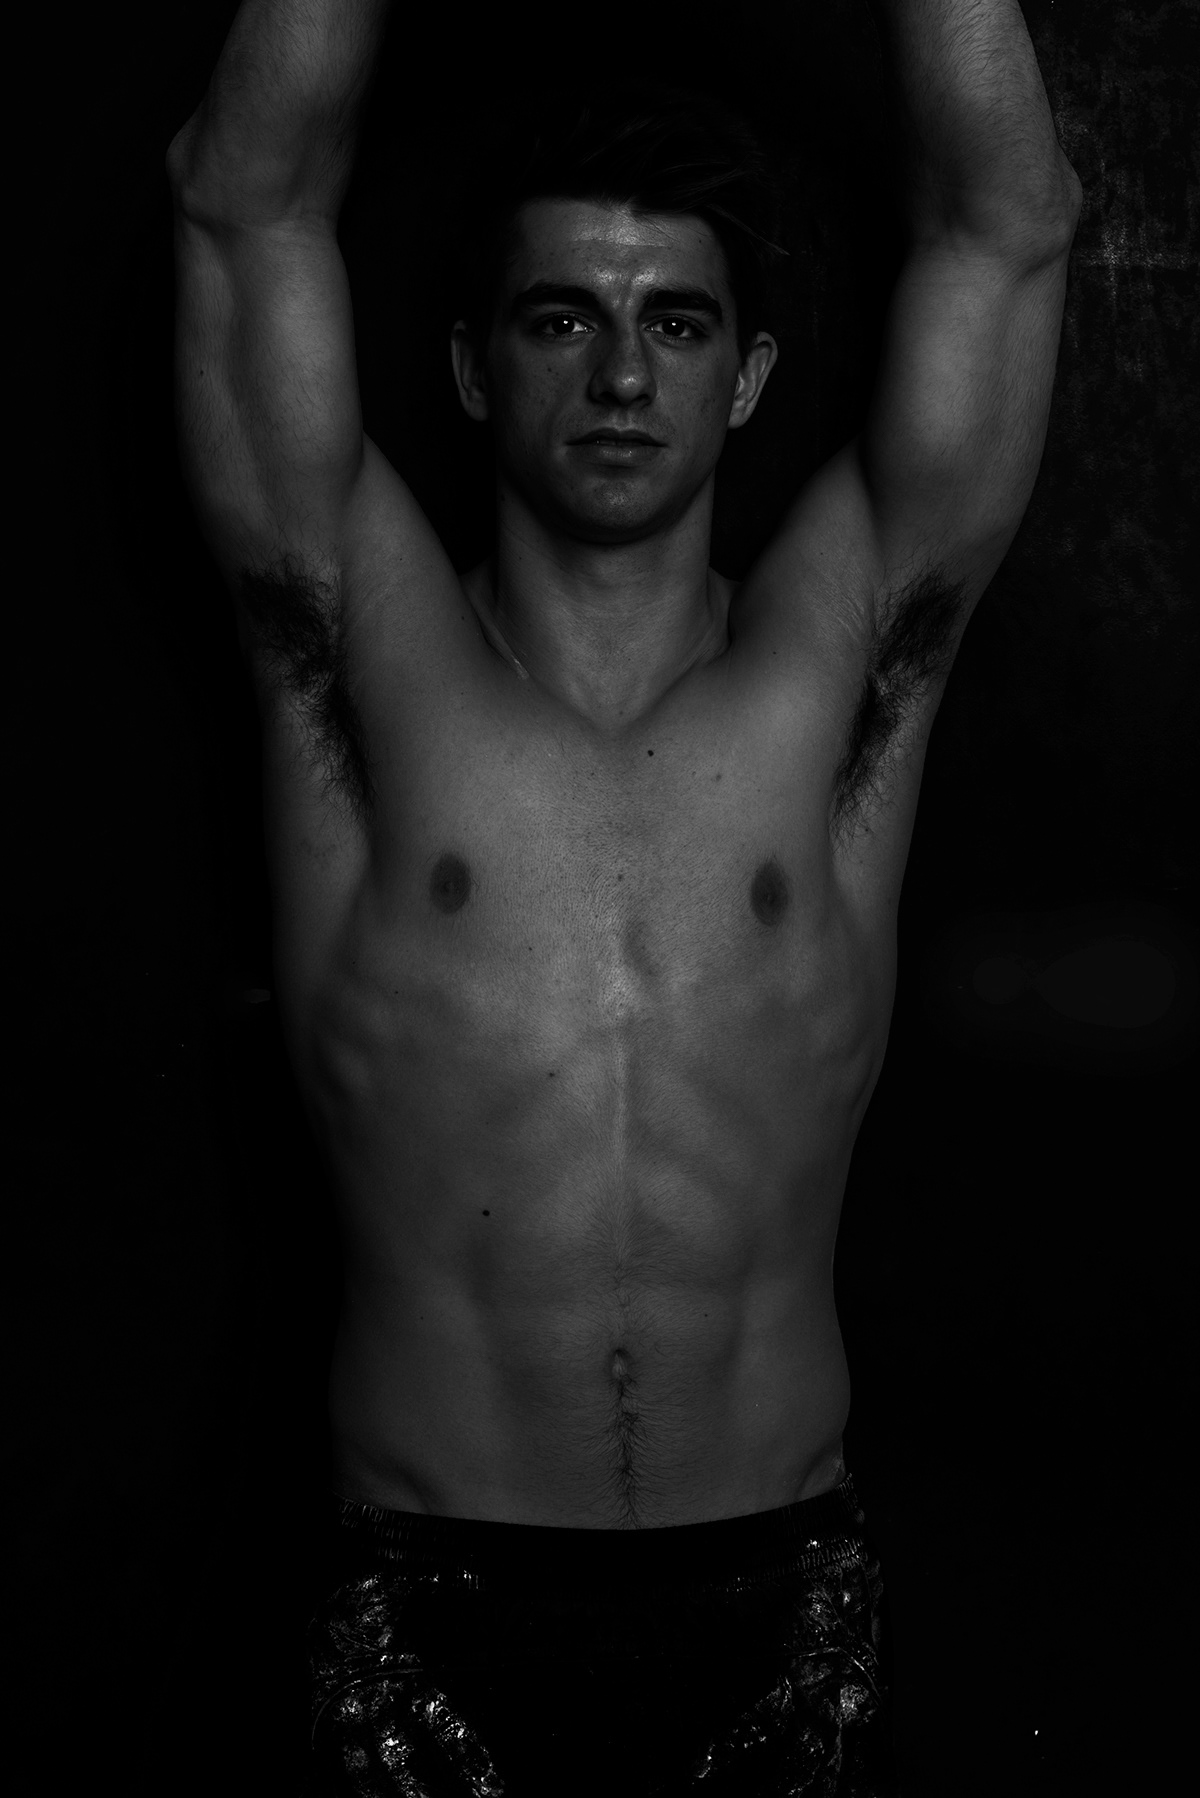 gymnasts british gb Olympics Max Whitlock Reis Bedford Jay Thompson portrait shoot Nikon